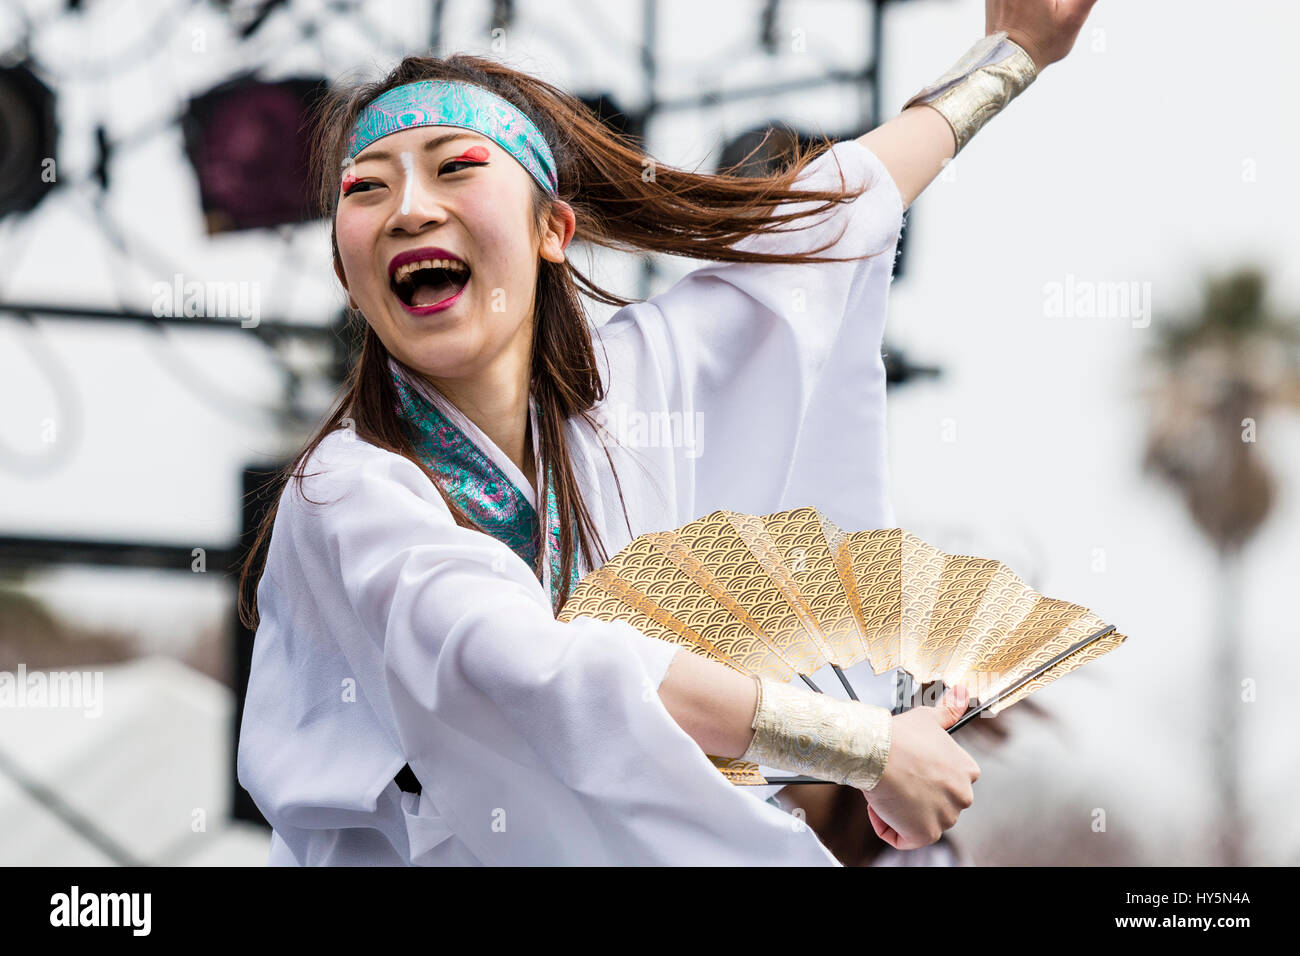 Japan, Kumamoto, Hinokuni Yosakoi dance Festival. Close-up of woman dancer in white yukata and blue head-band, holding open fan, swirling around. Stock Photo